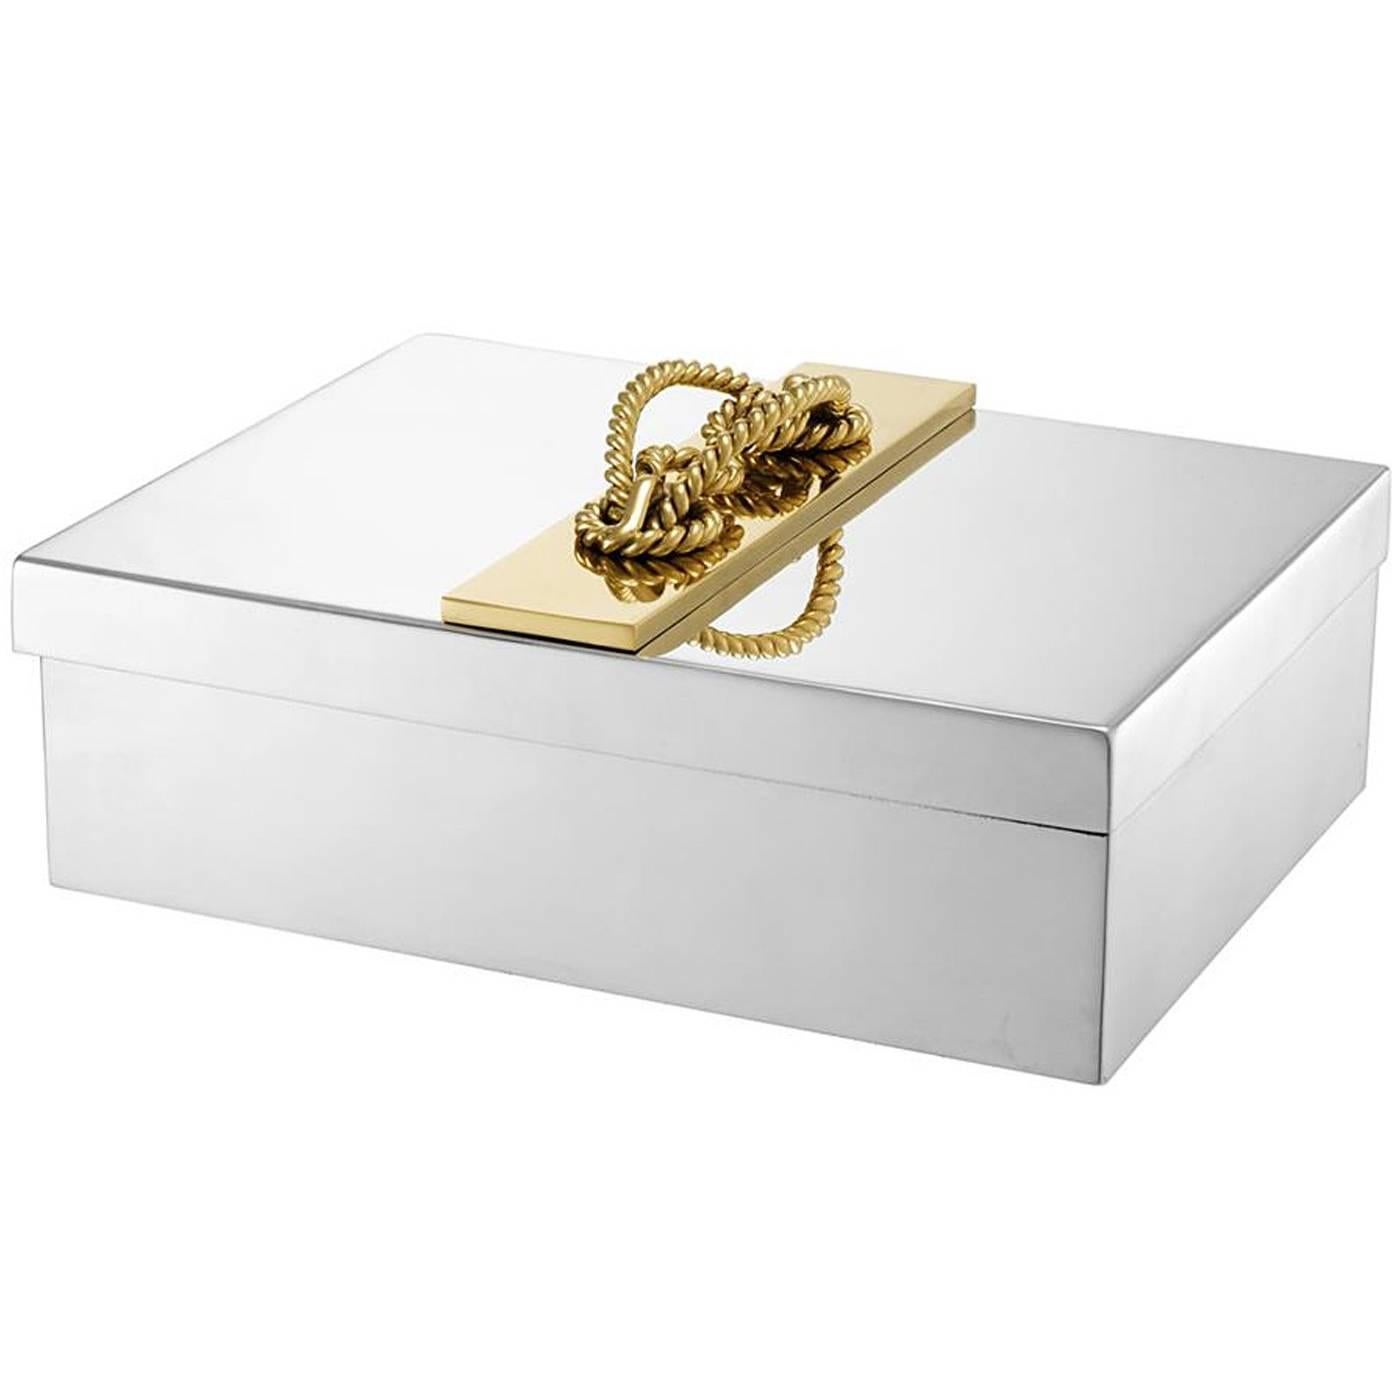 Gold Knot Jewelry Box in Nickel Finish